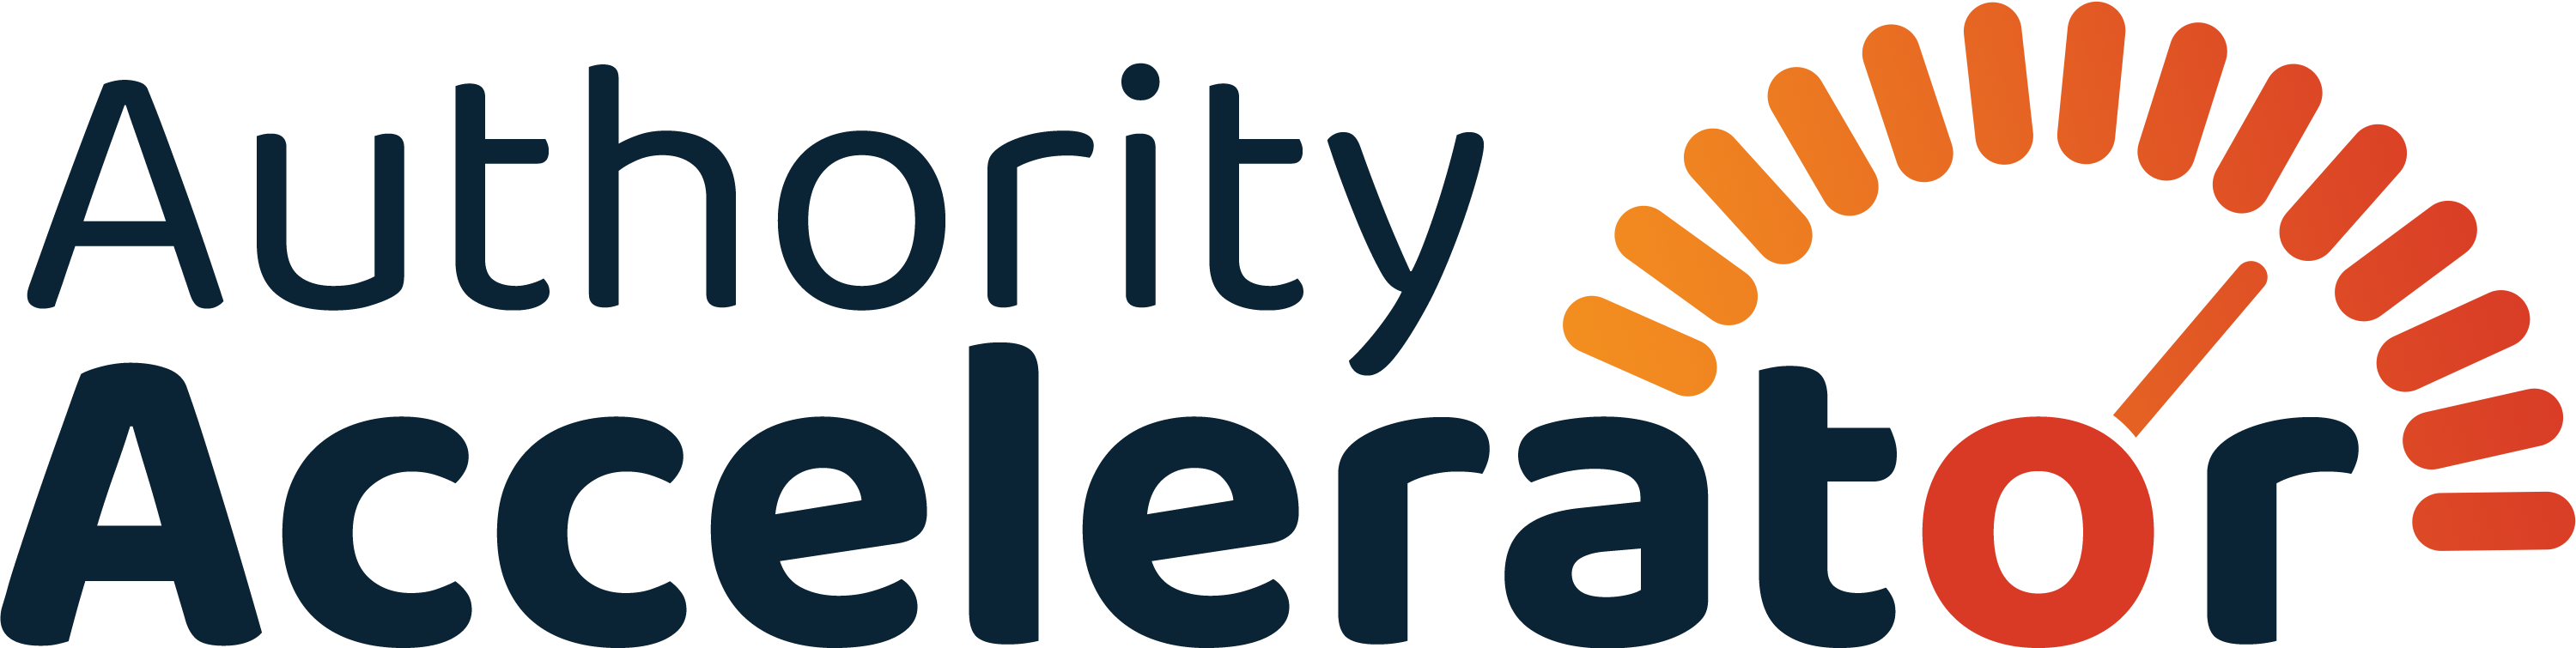 Authority Accelerator Logo